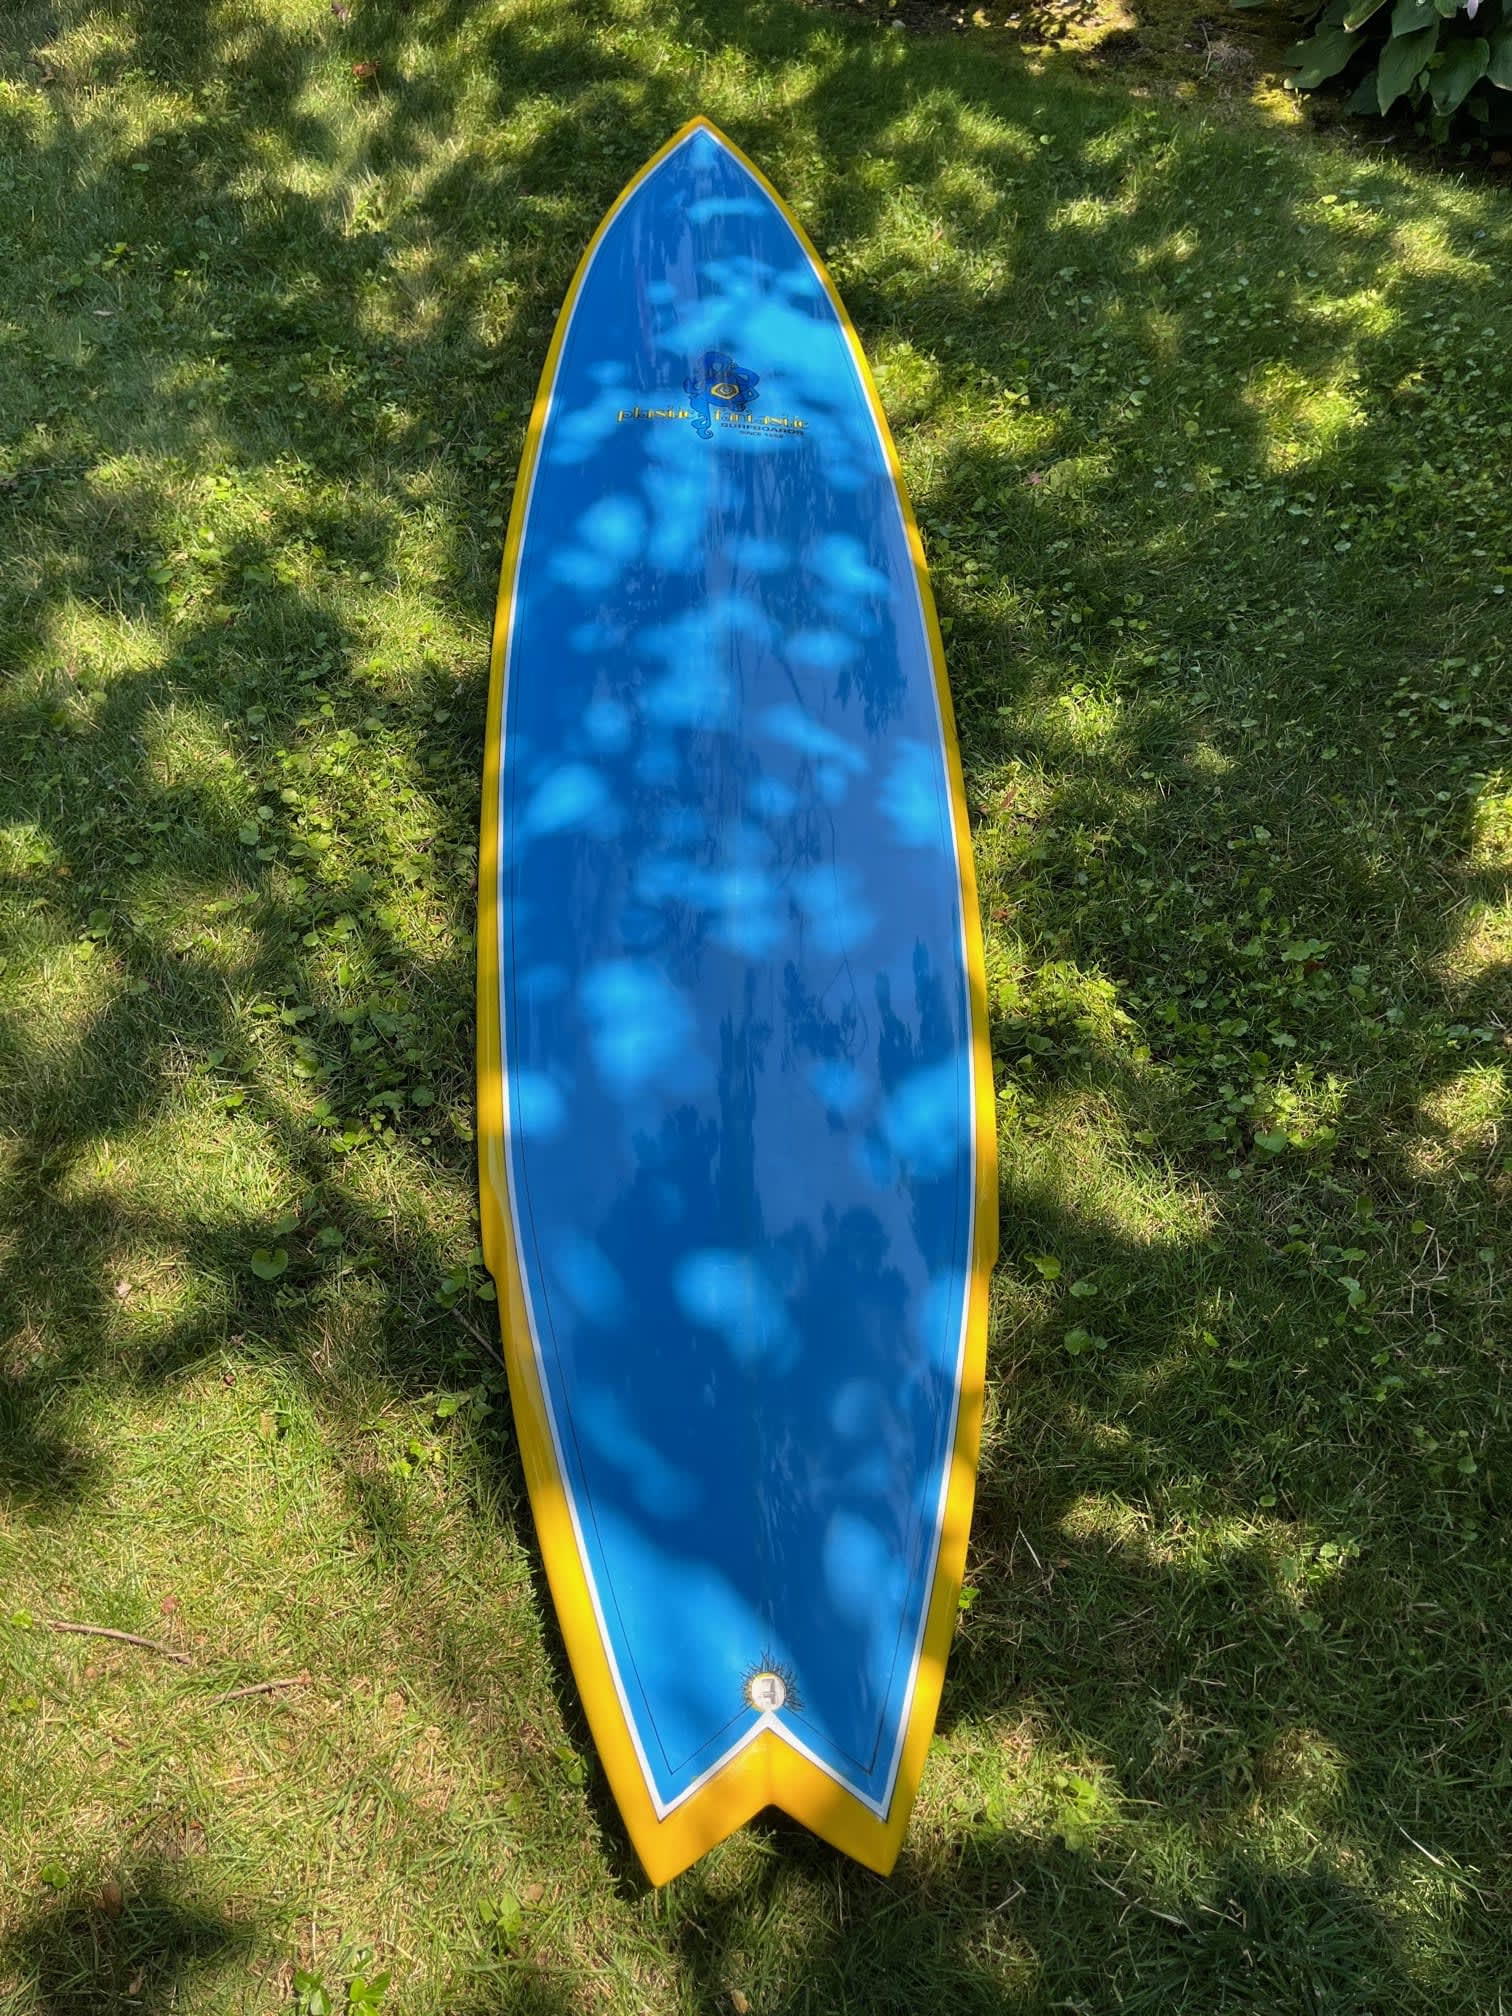 PF Flyer Surfboard. 8’5”x 22 7/8” x 3 1/16” Stinger swallow tail ...